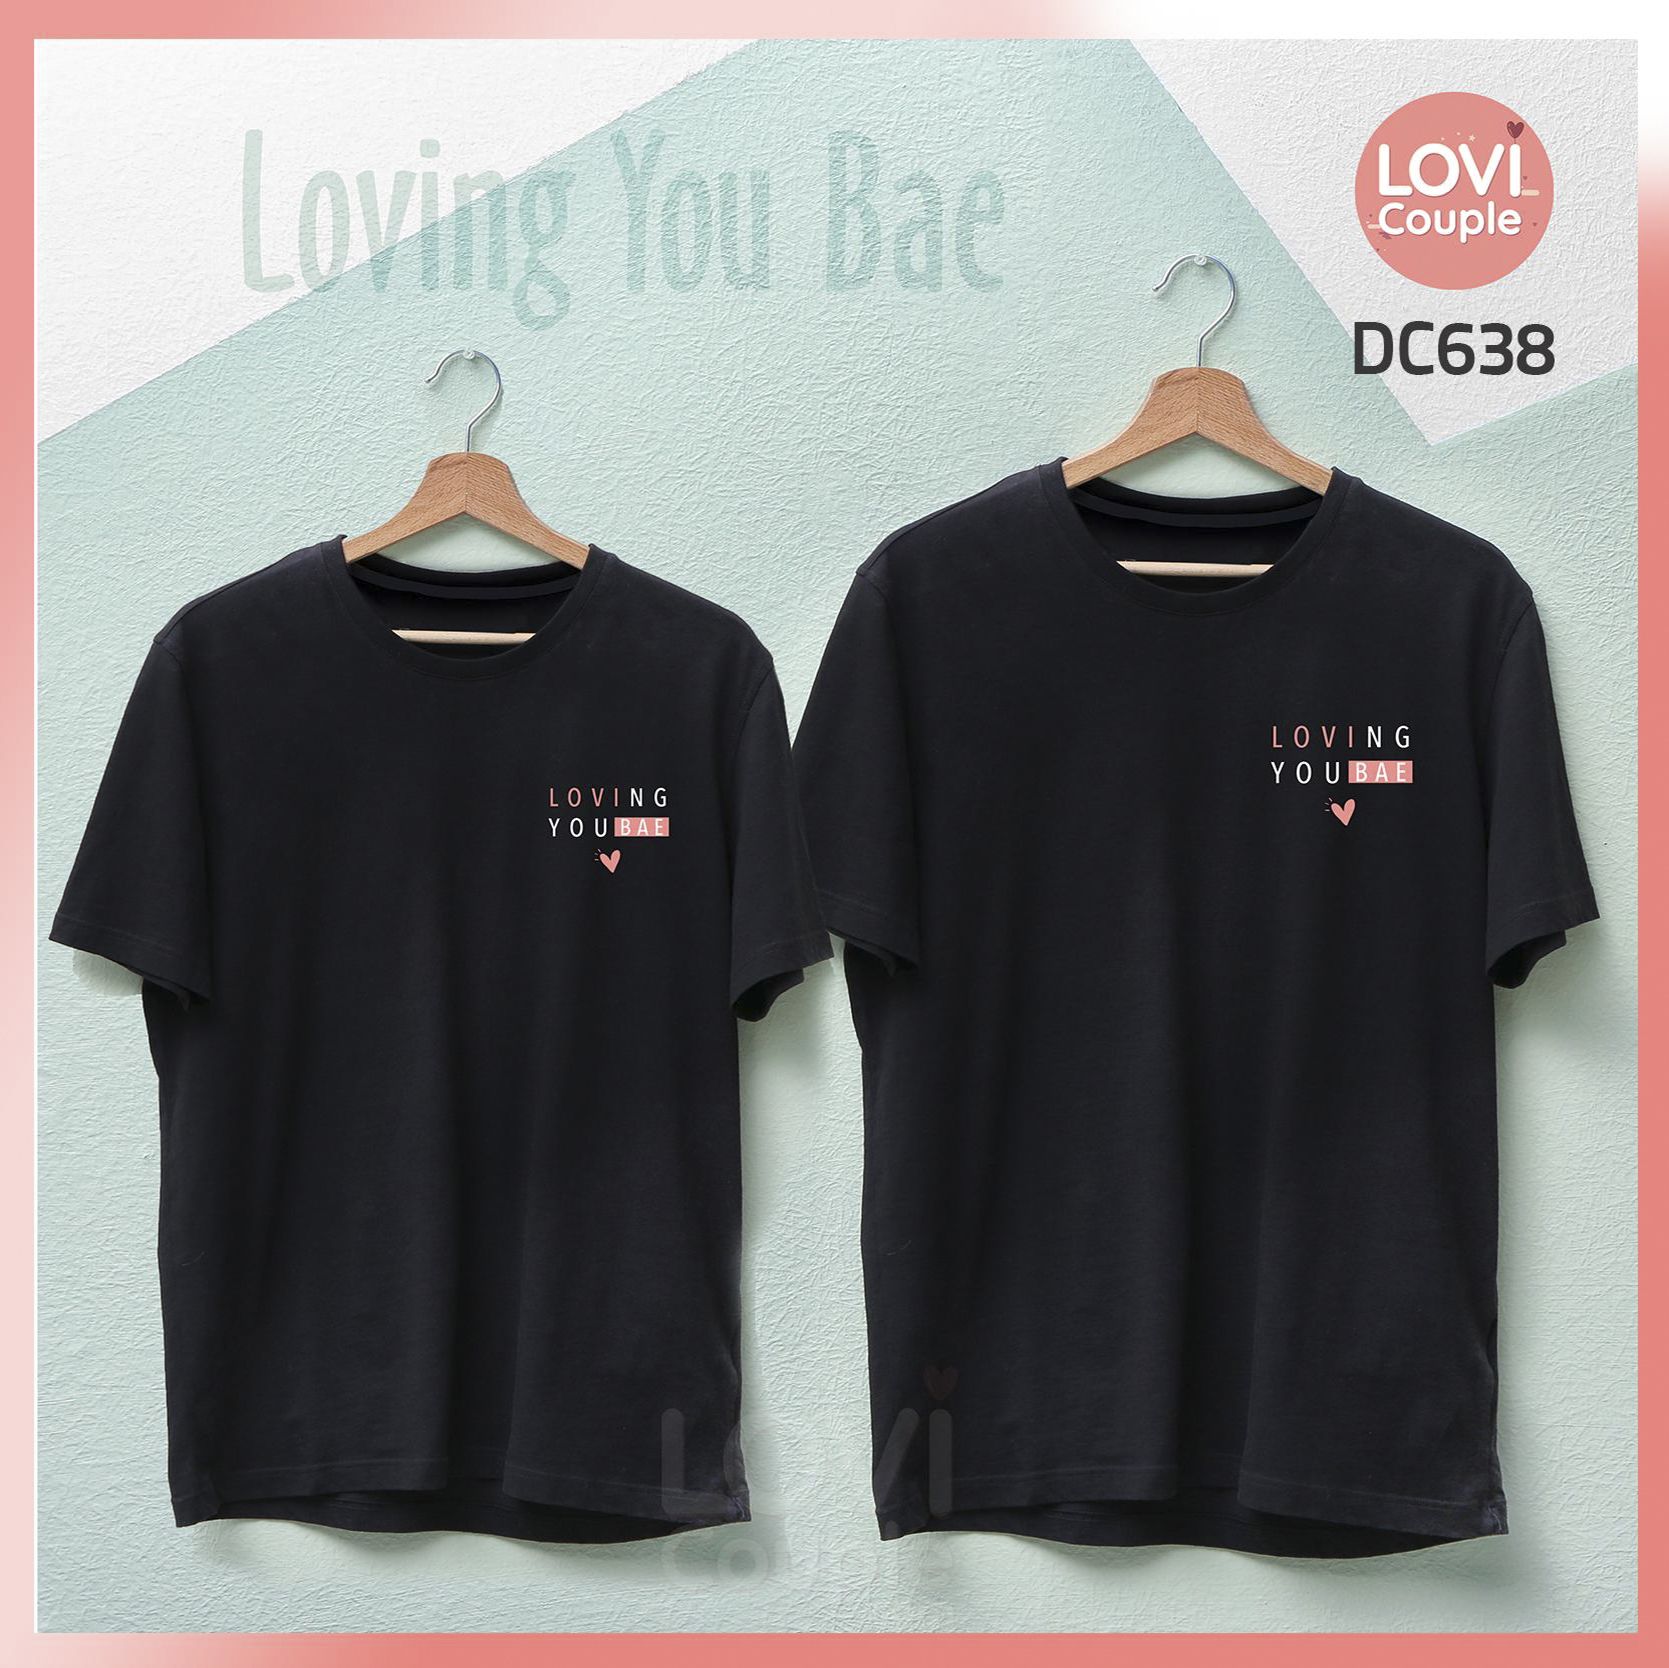 DC638 Loving You Bae